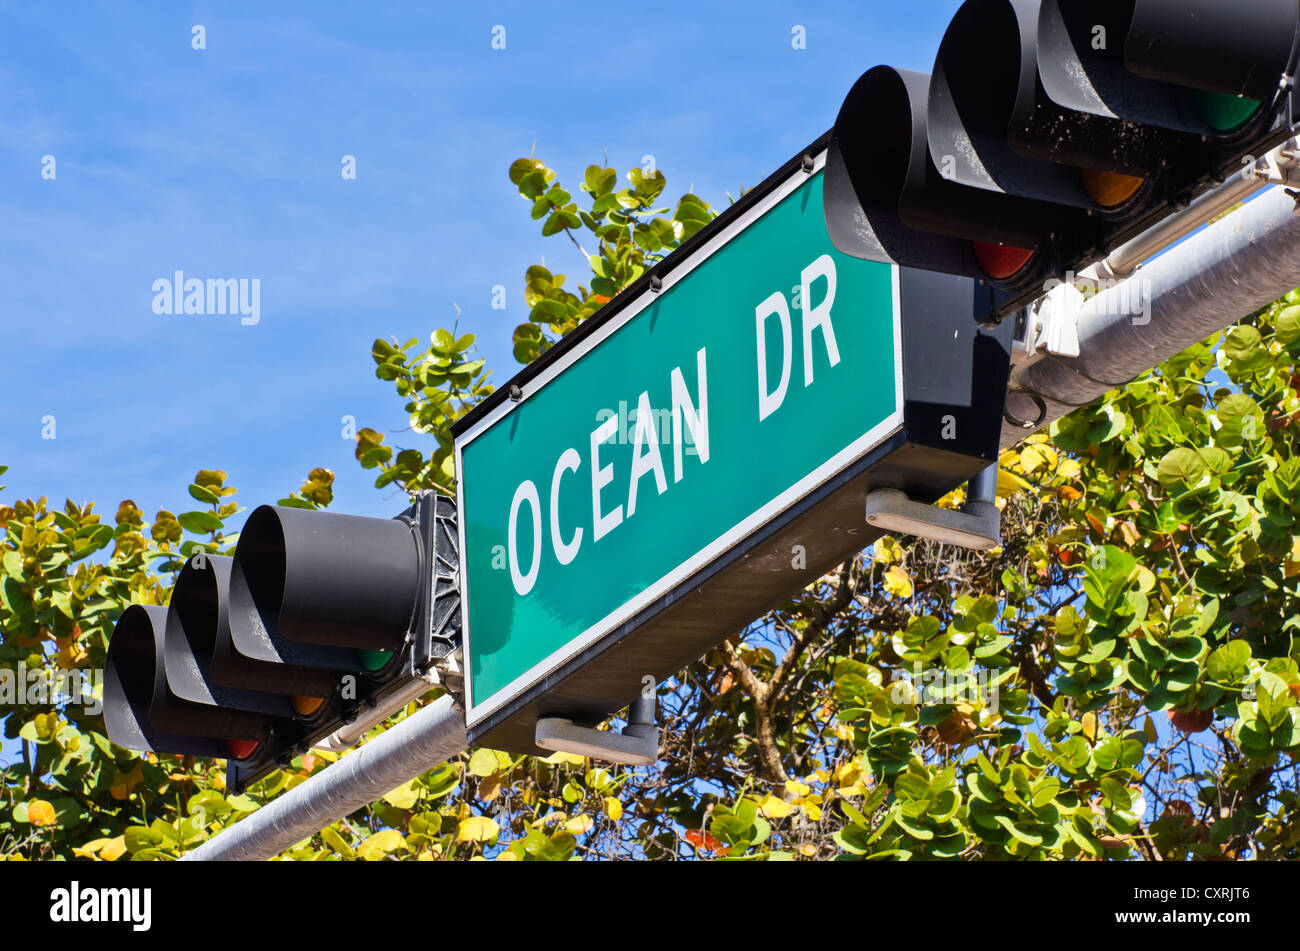 Ocean Drive street sign avec feux de circulation, Miami Beach, Florida, USA Banque D'Images